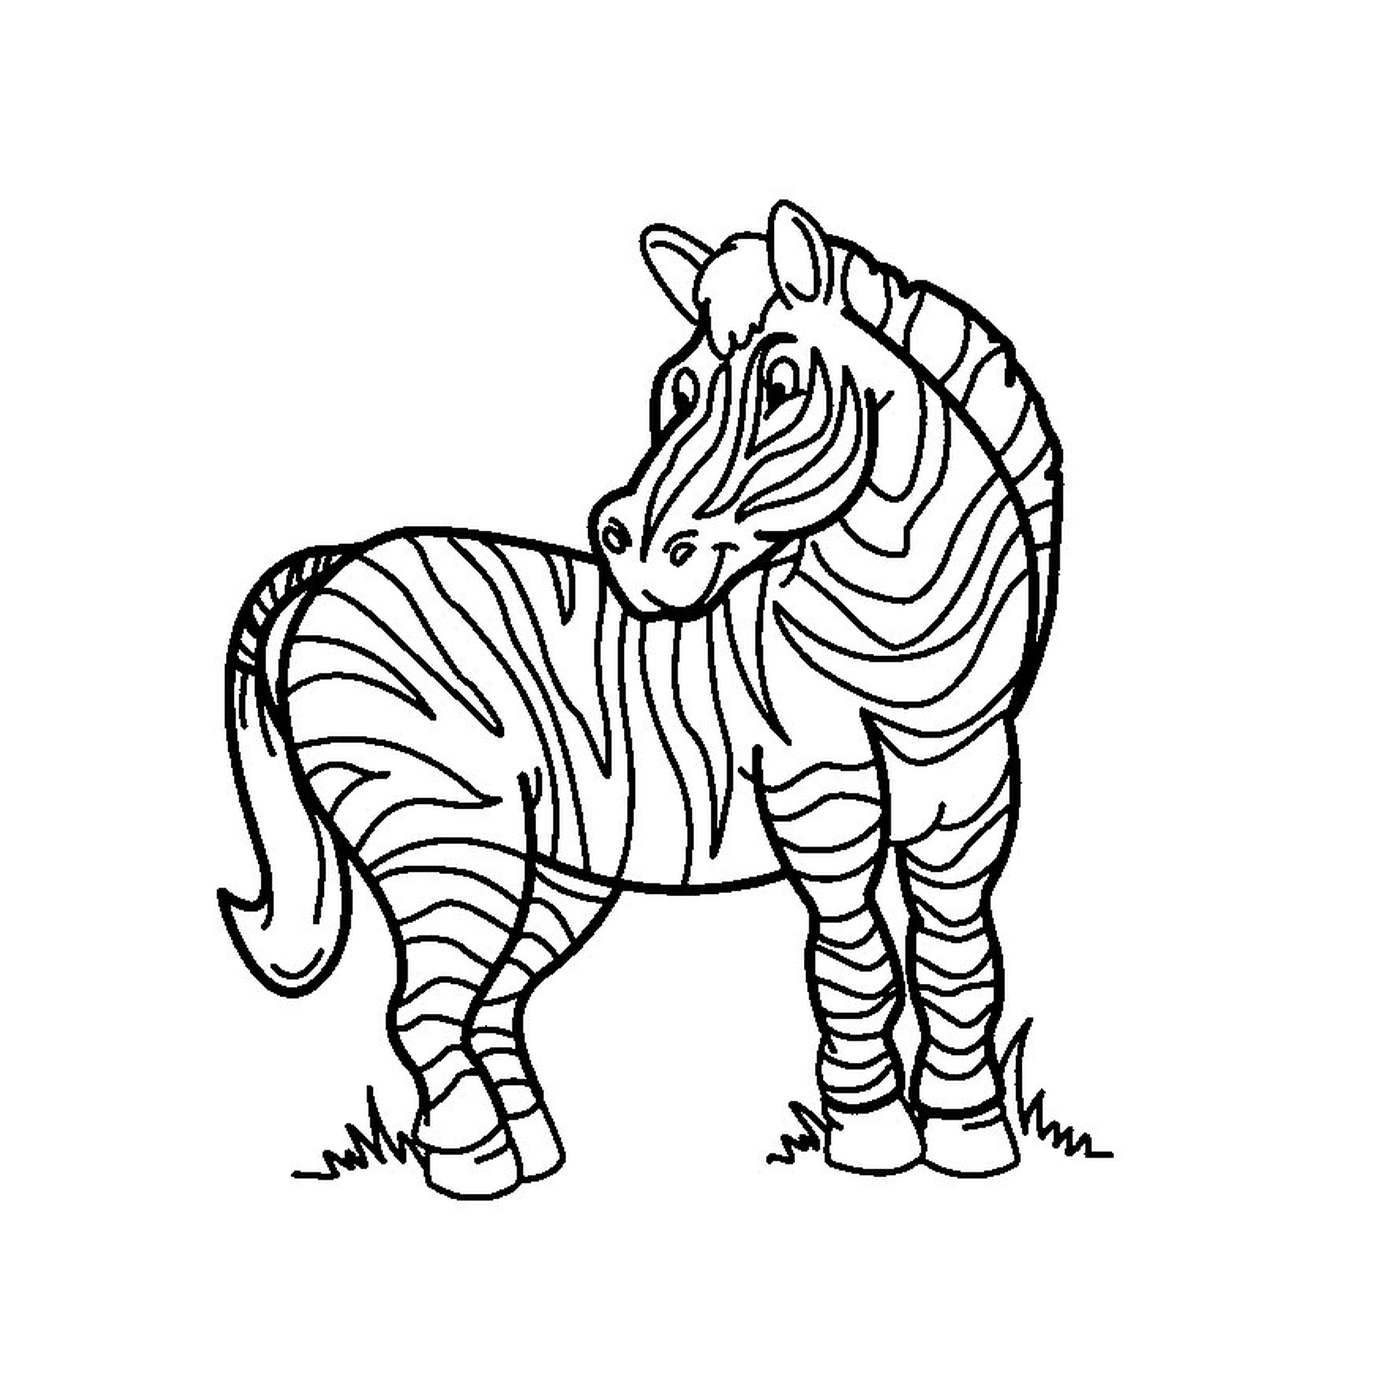  Bela zebra na savana 